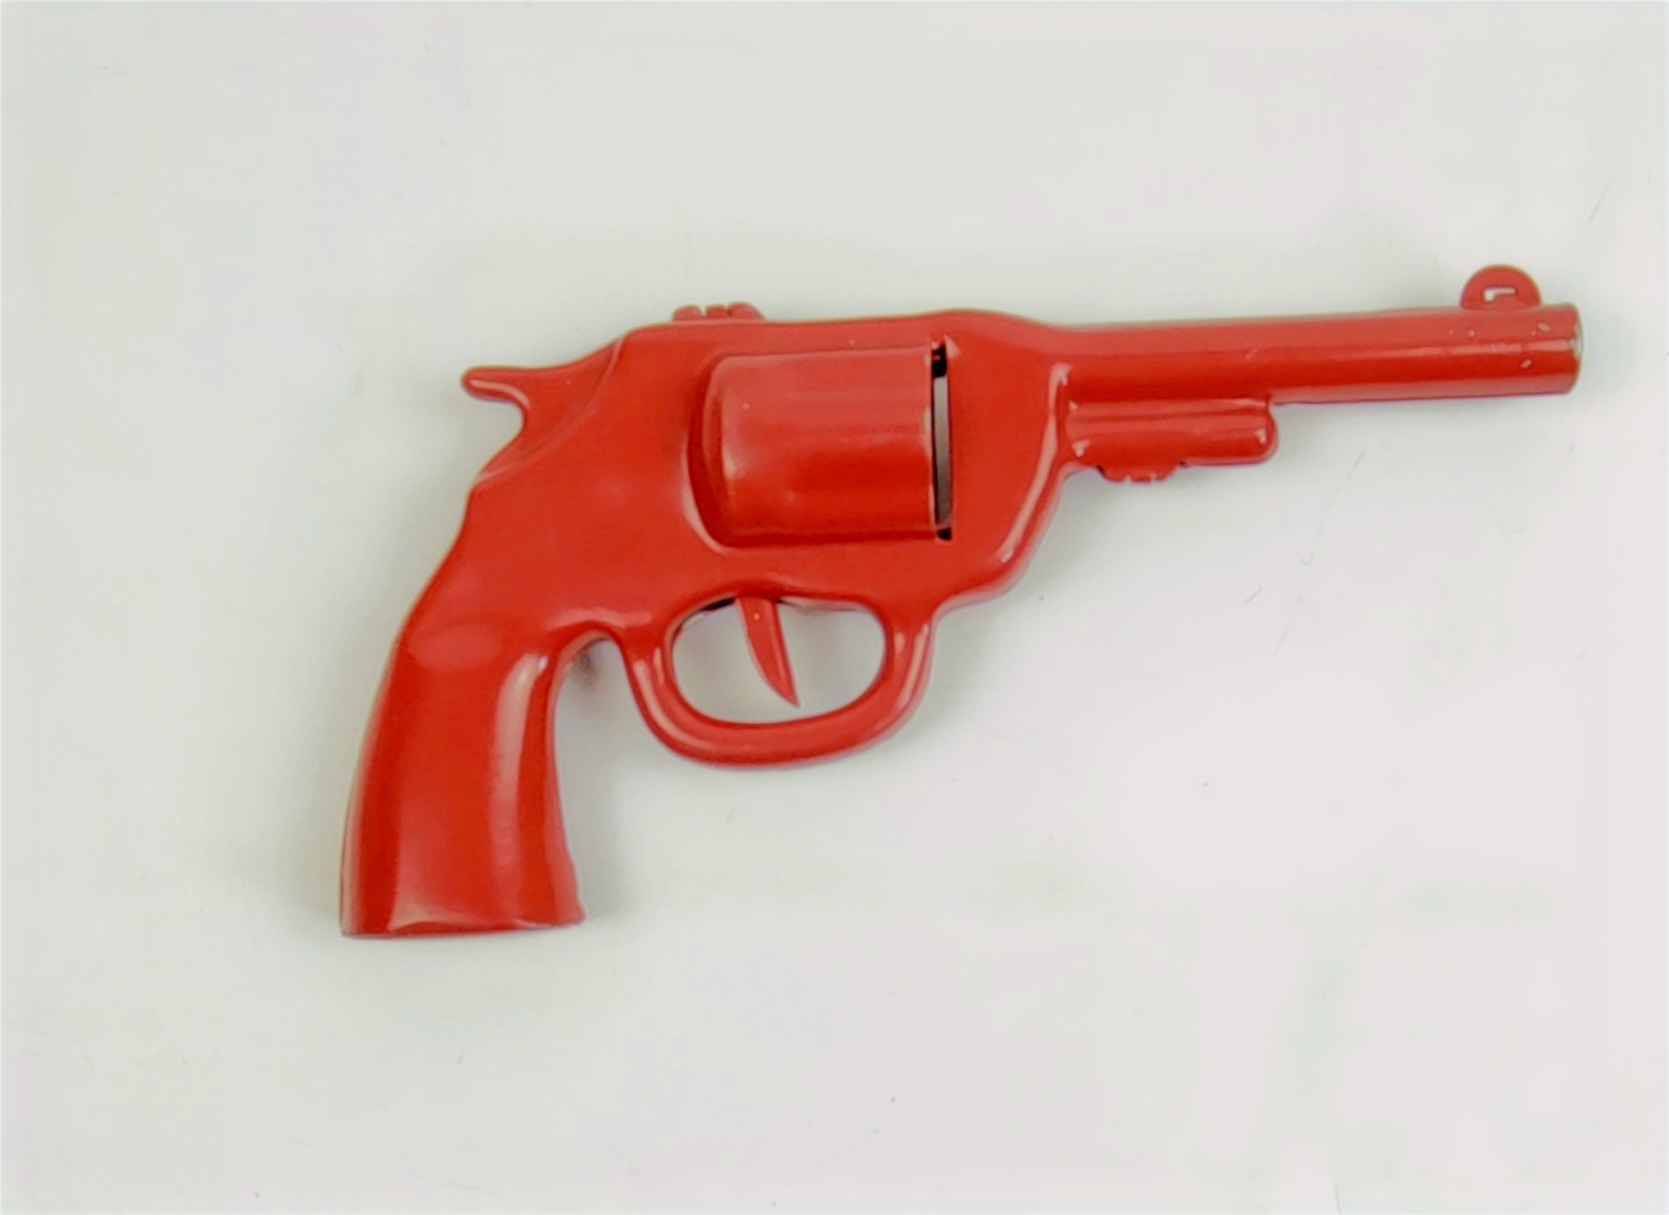 Collectible Toy Gun Grouping